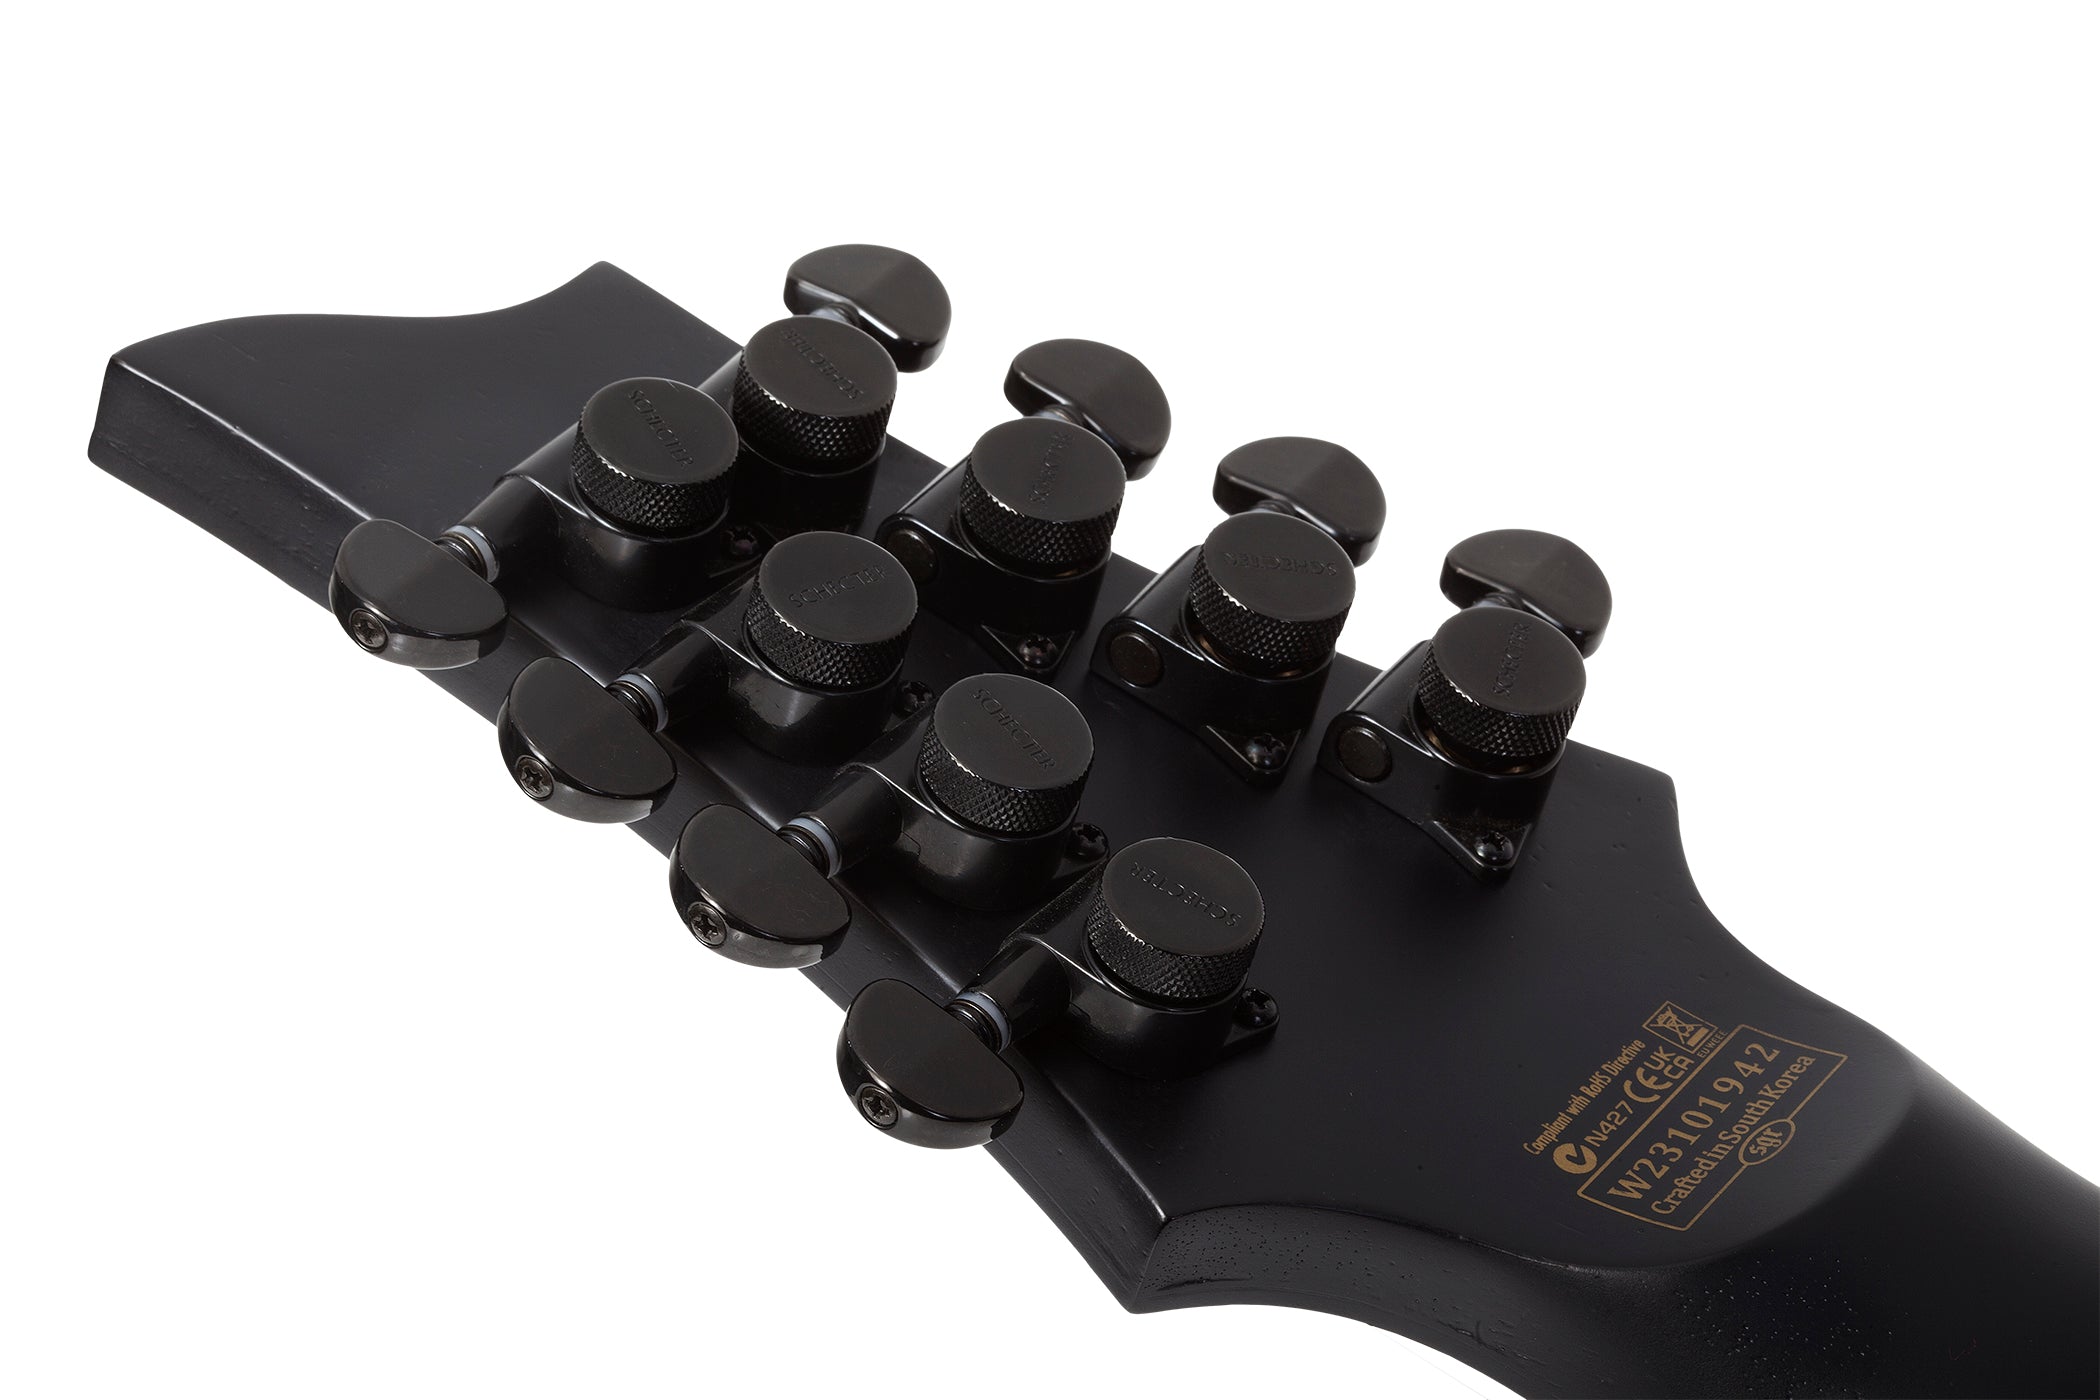 Schecter PT-8 Black Ops 8 String Multiscale Electric Guitar, Satin Black Open Pore 622-SHC